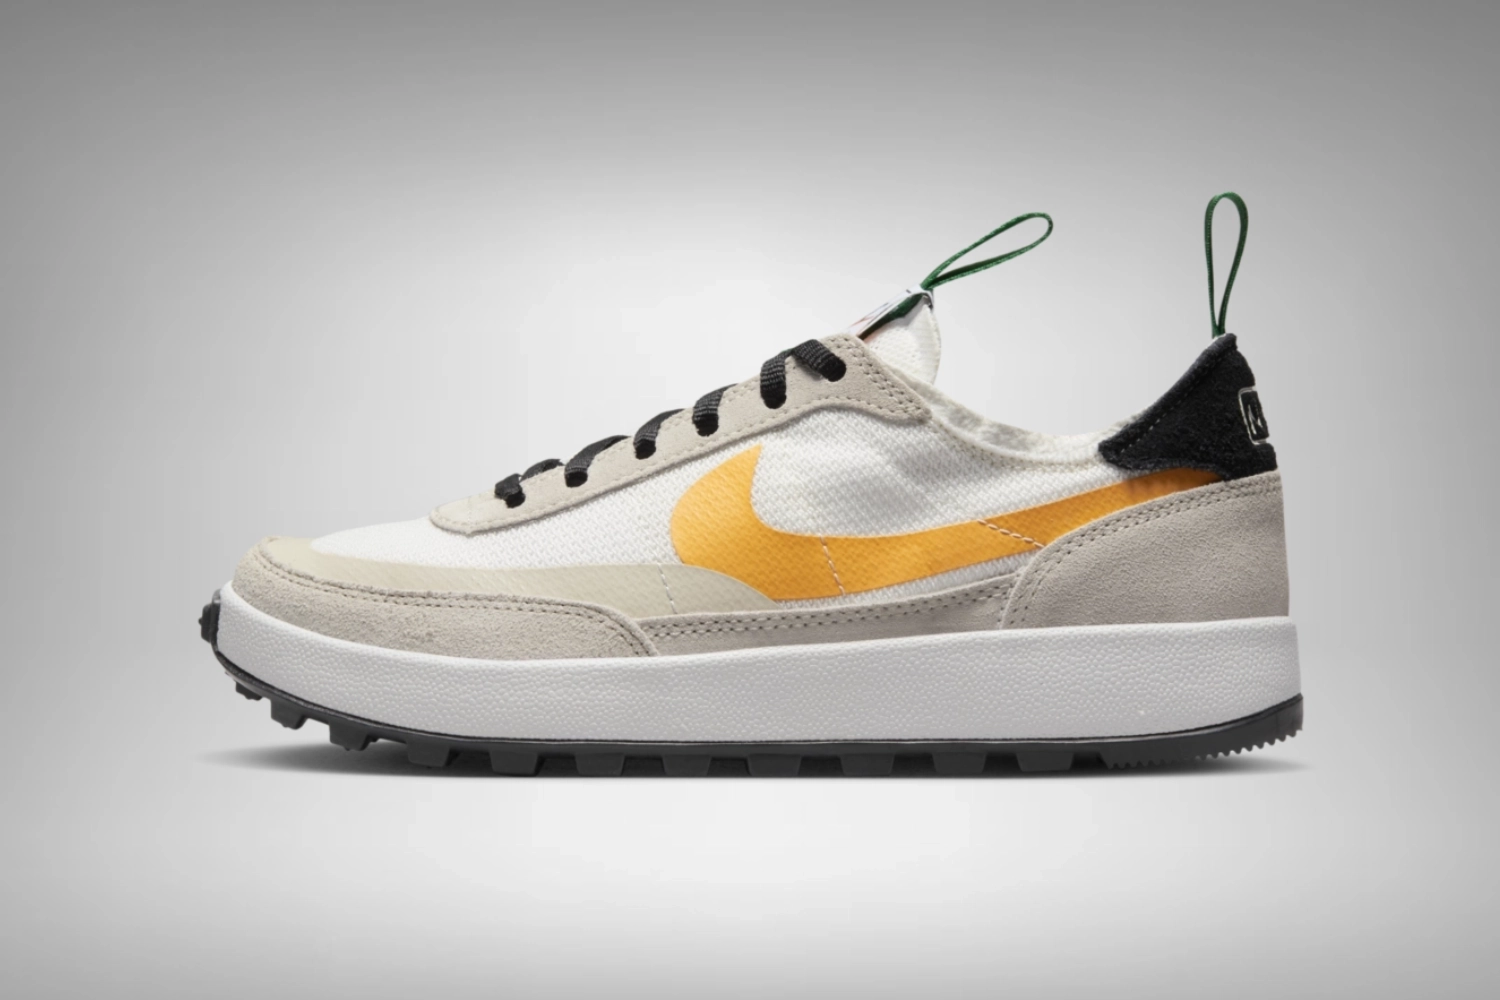 The Tom Sachs x Nike General Purpose Shoe returns